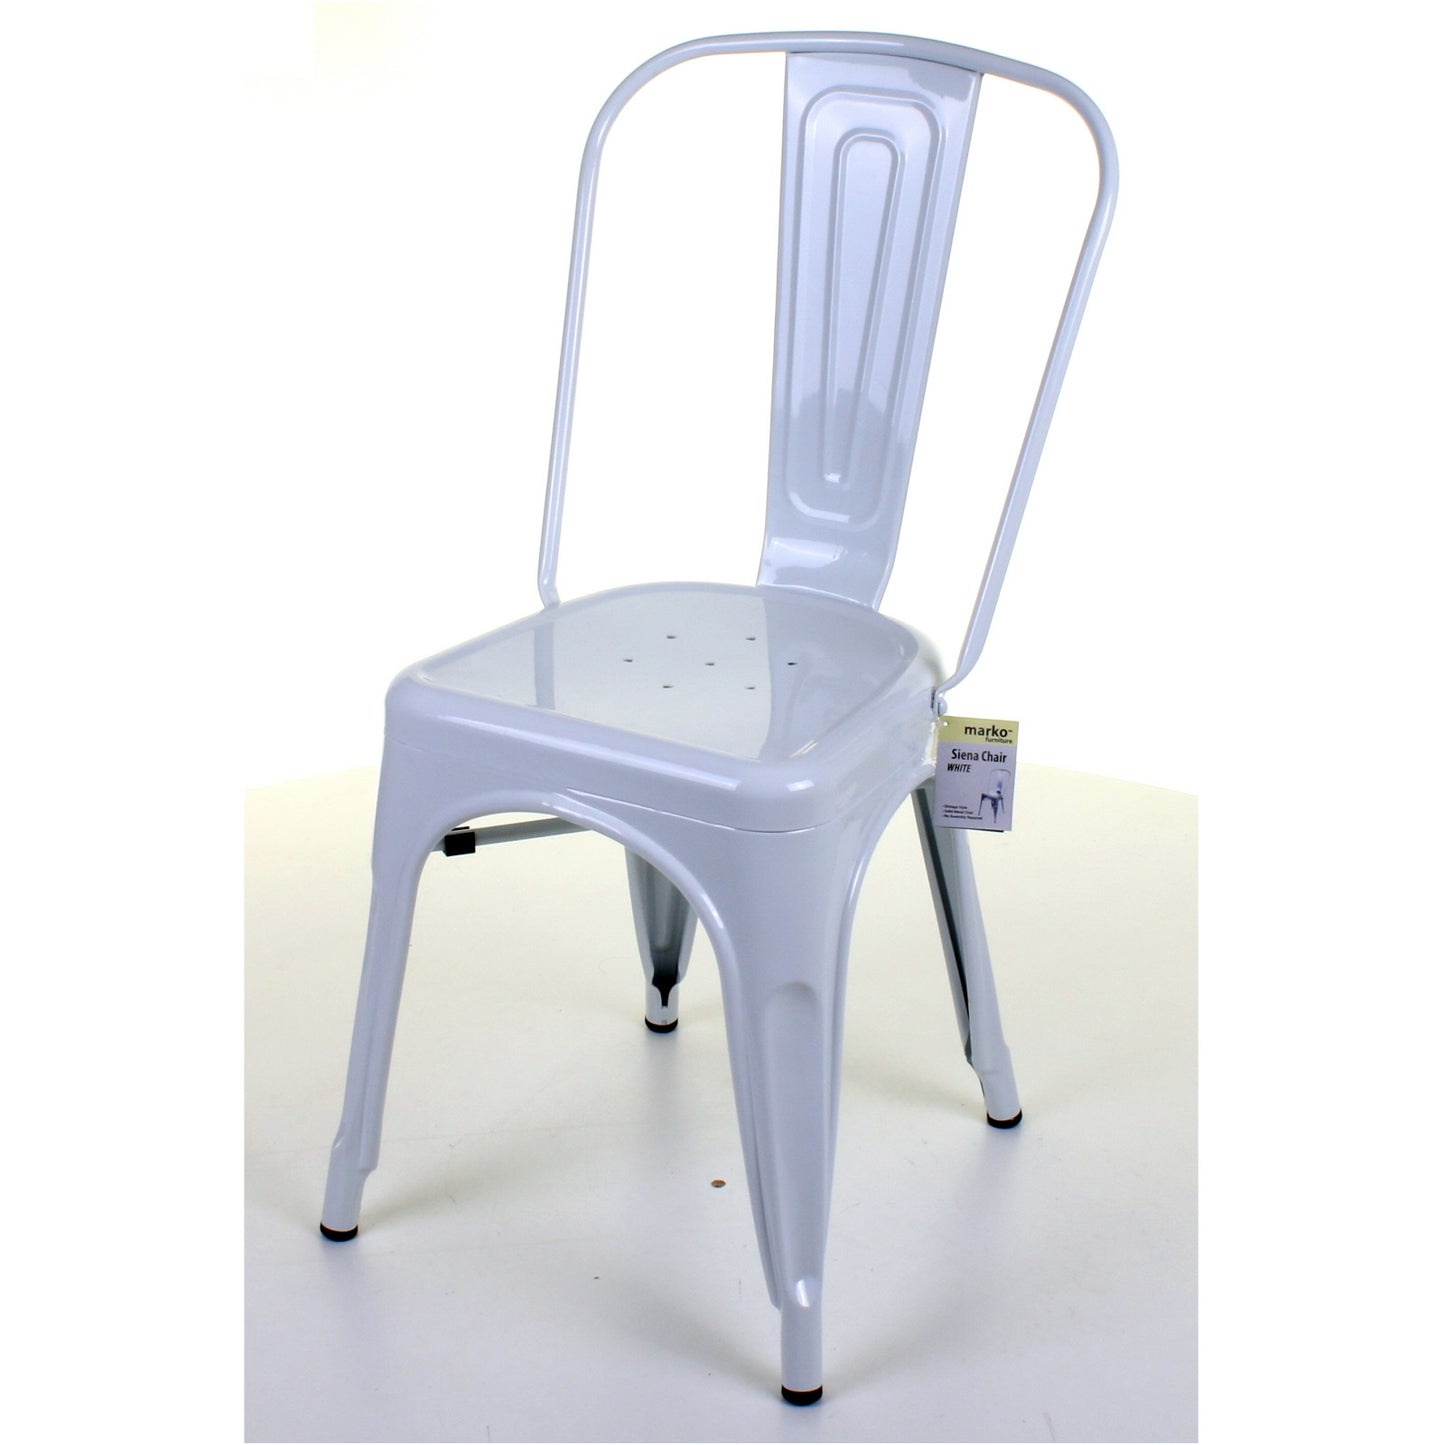 9PC Taranto Table, 2 Forli Chairs, 3 Siena Chairs & 3 Castel Stools Set - White